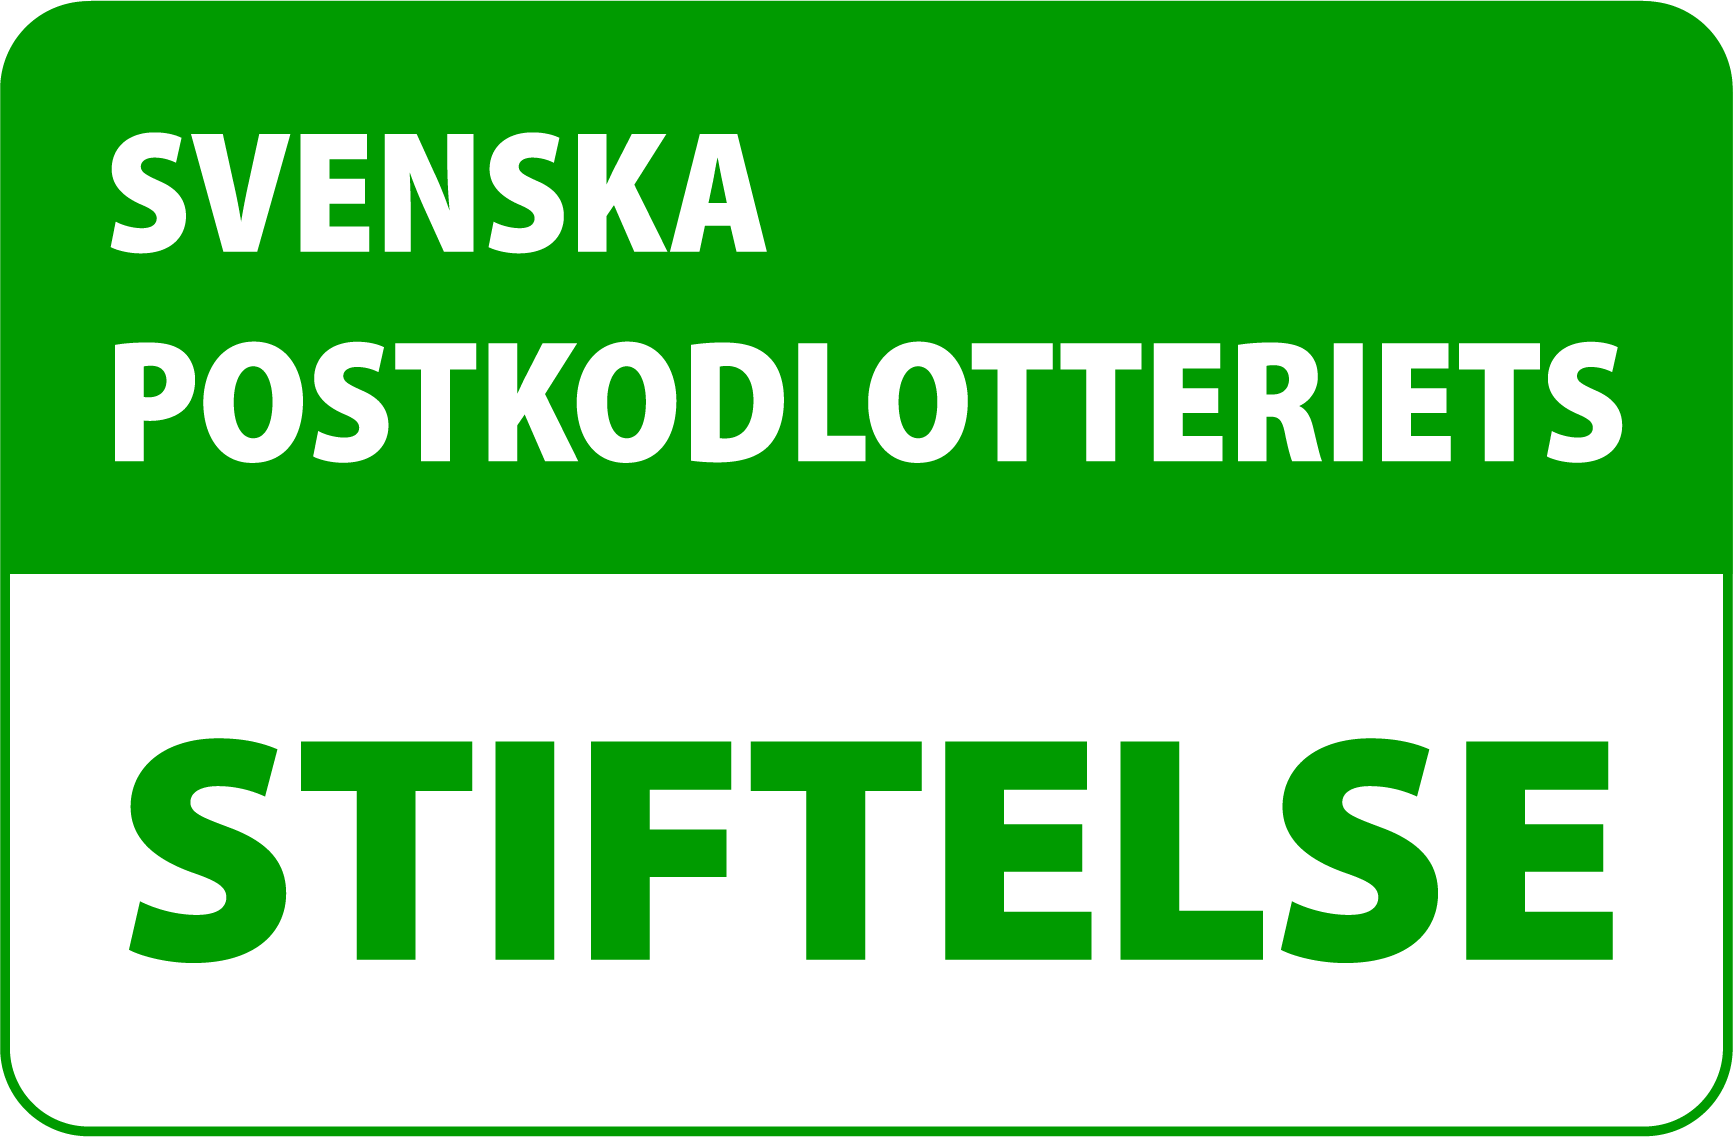 The Swedish Postcode Lottery Foundation